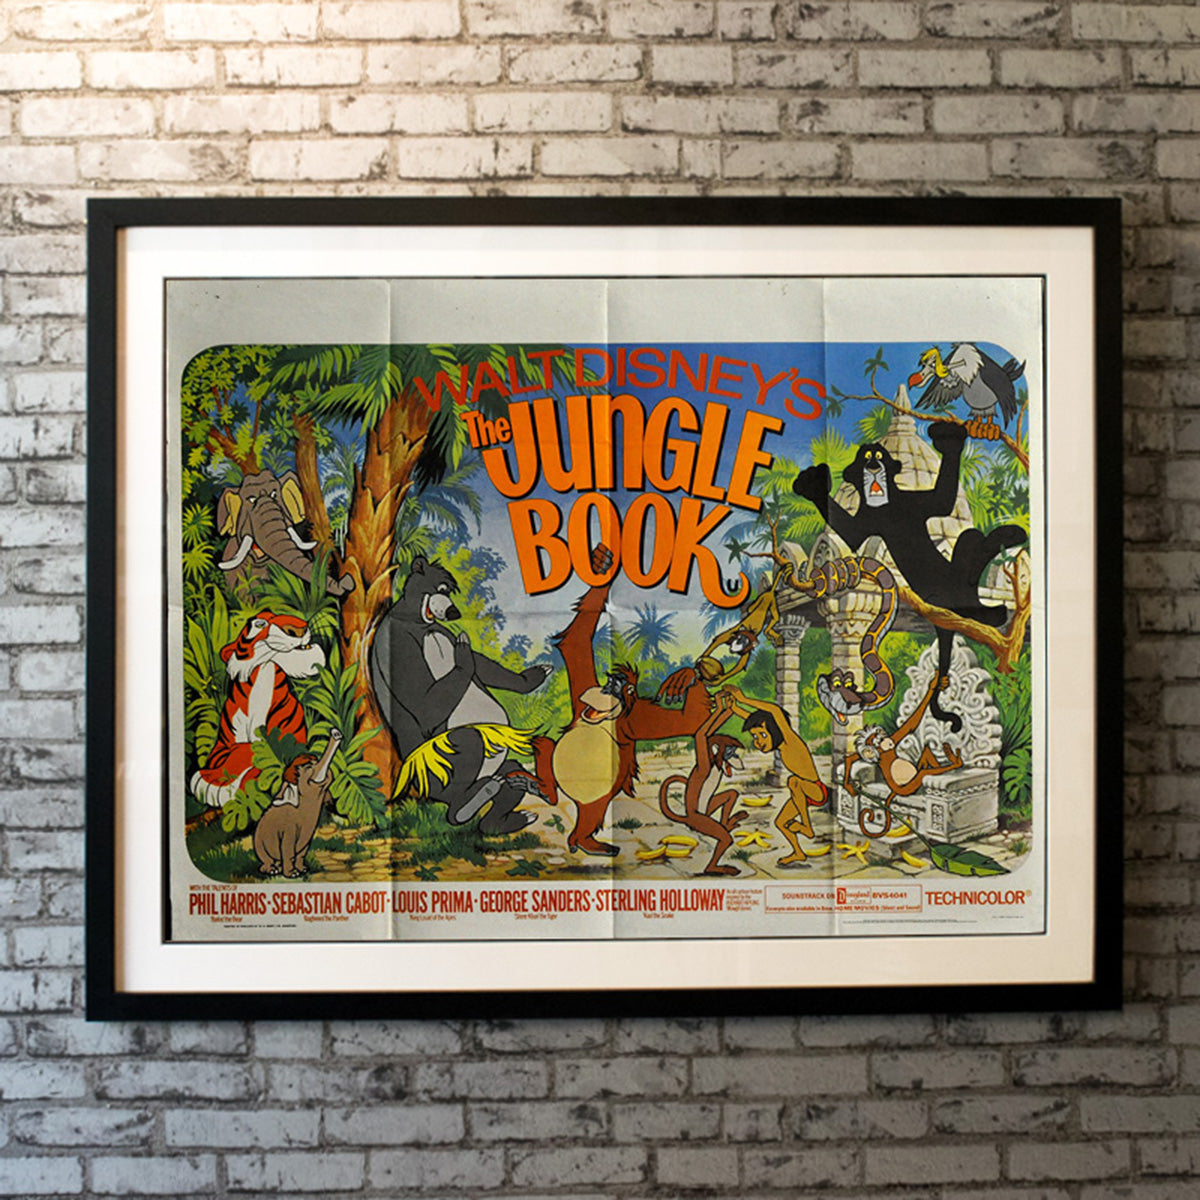 Original Movie Poster of Jungle Book, The (1975R)